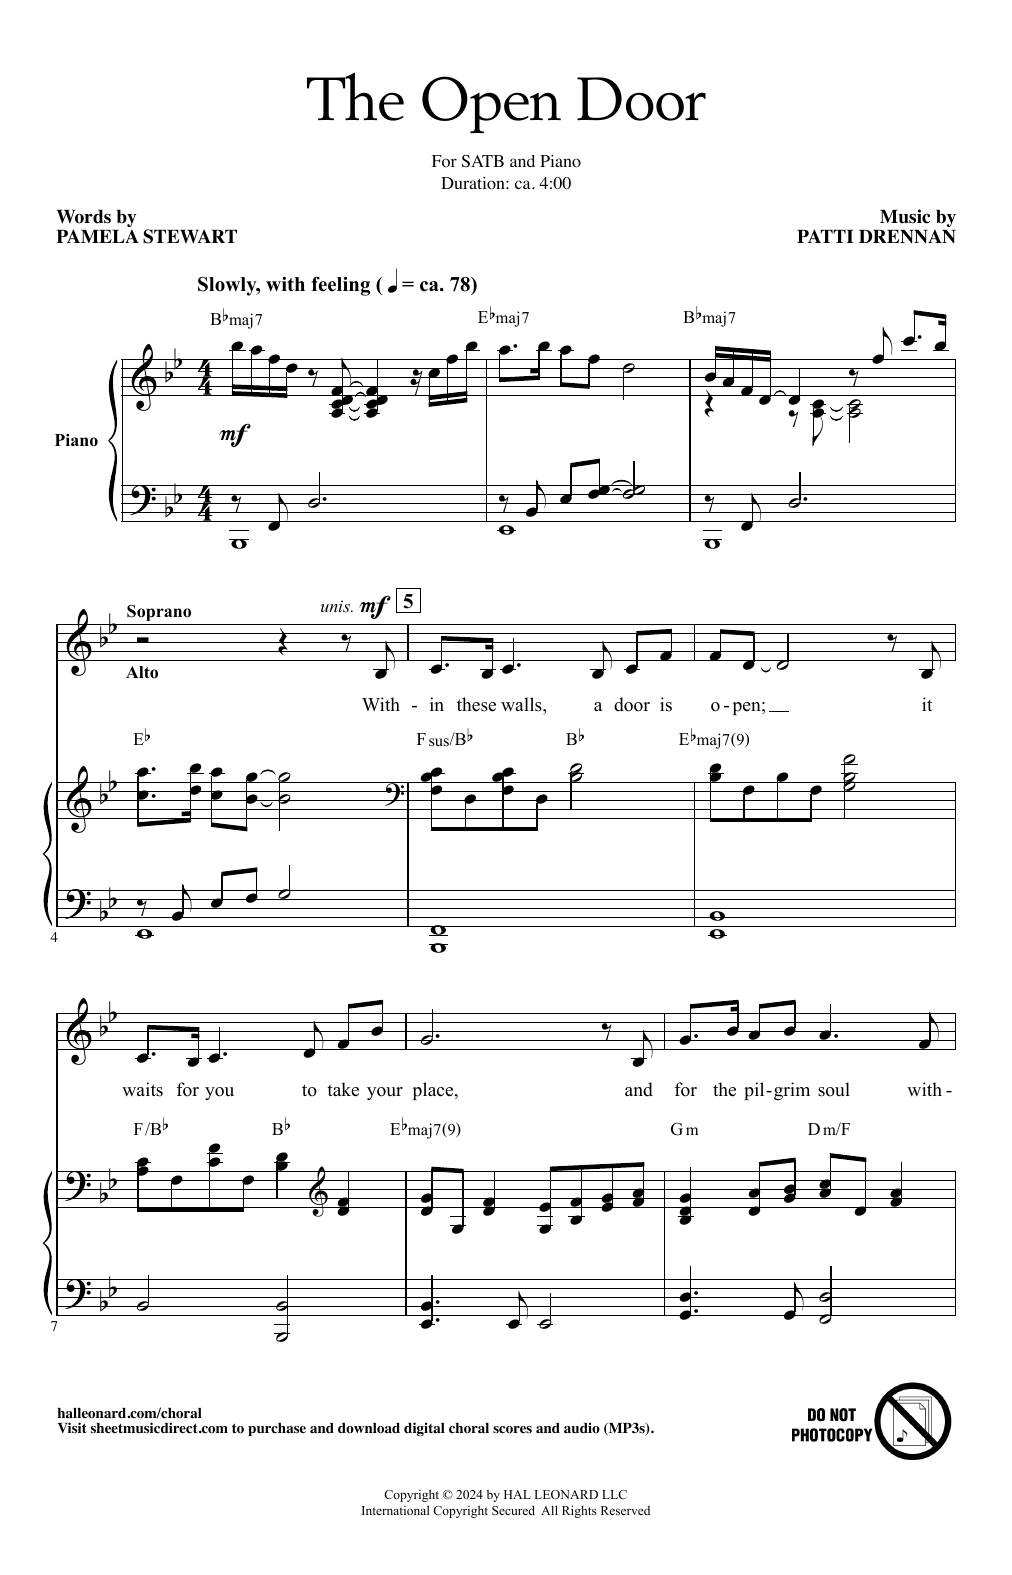 Patti Drennan The Open Door Sheet Music Notes & Chords for SATB Choir - Download or Print PDF